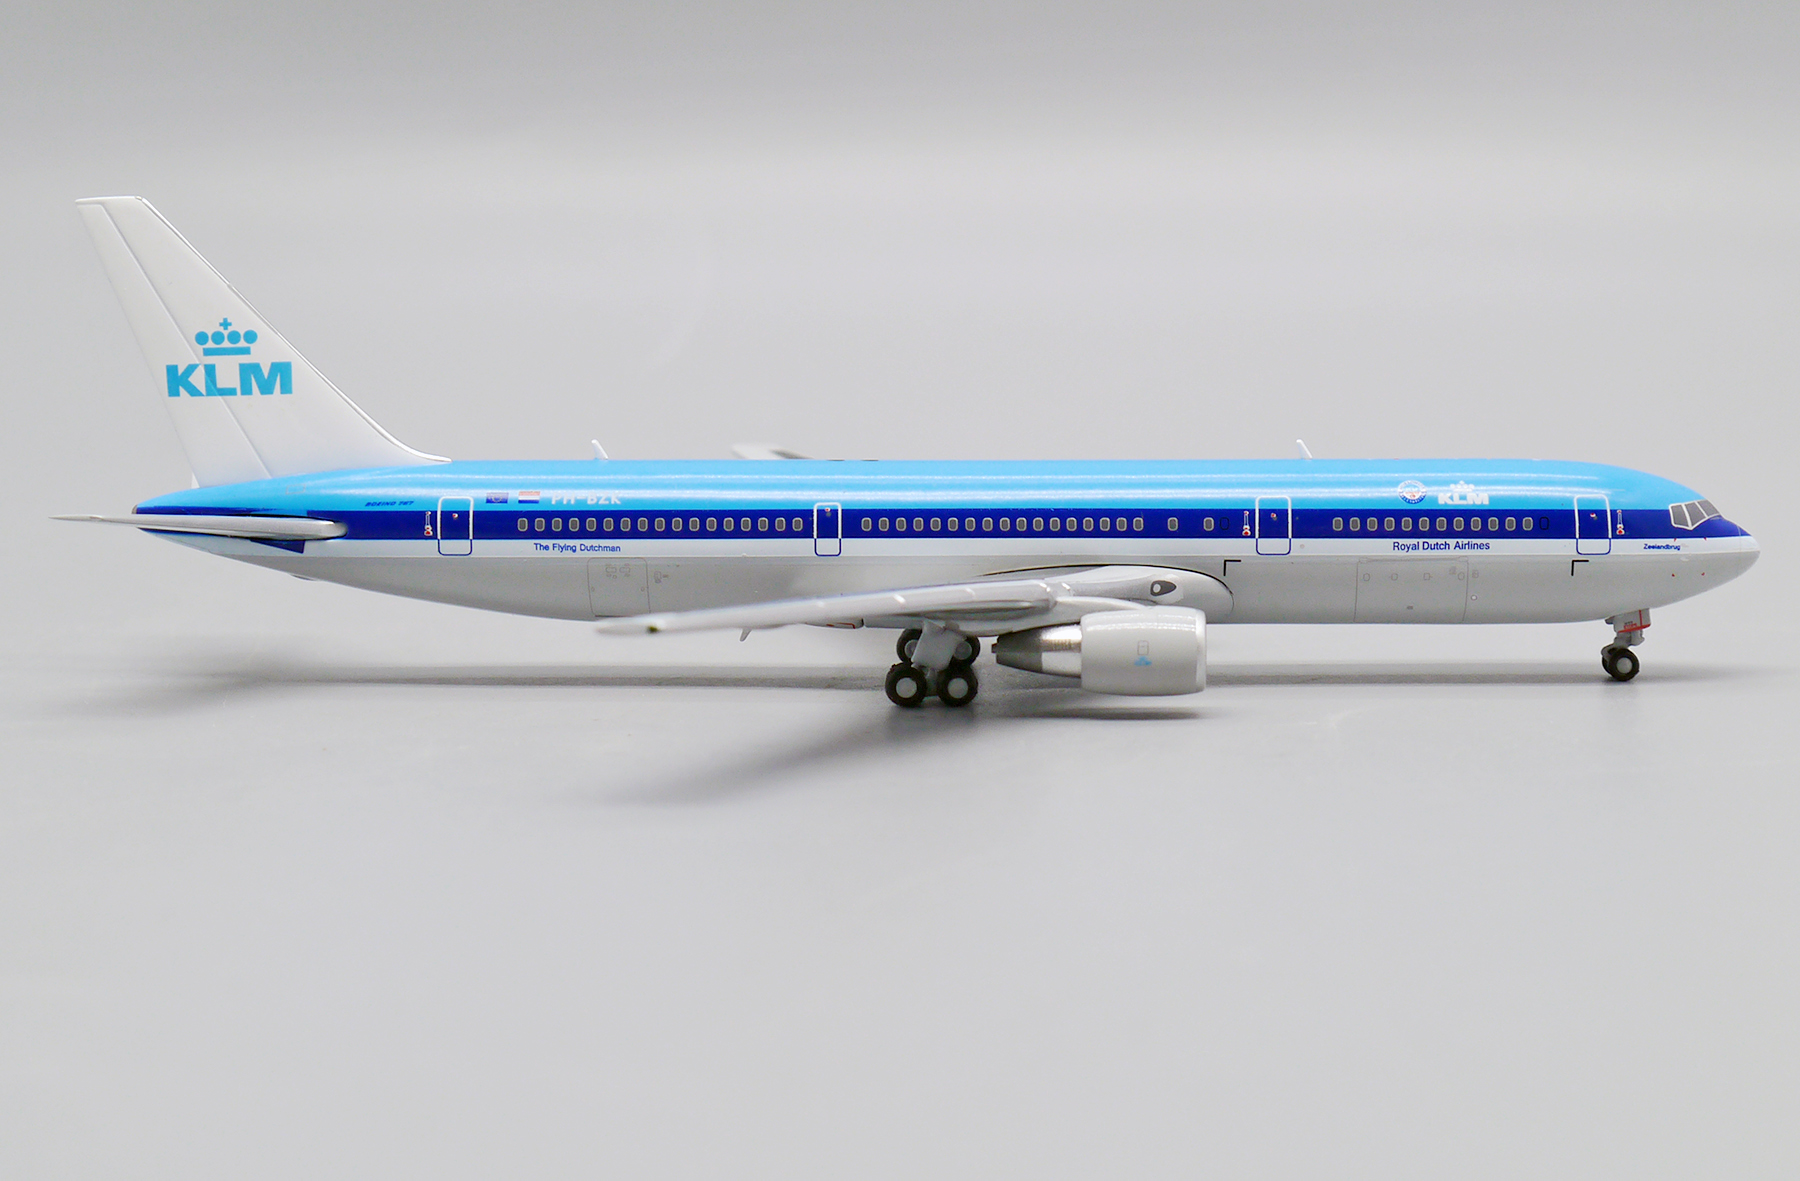 ScaleModelStore.com :: JC Wings 1:400 - XX4992 - KLM Boeing 767-300ER